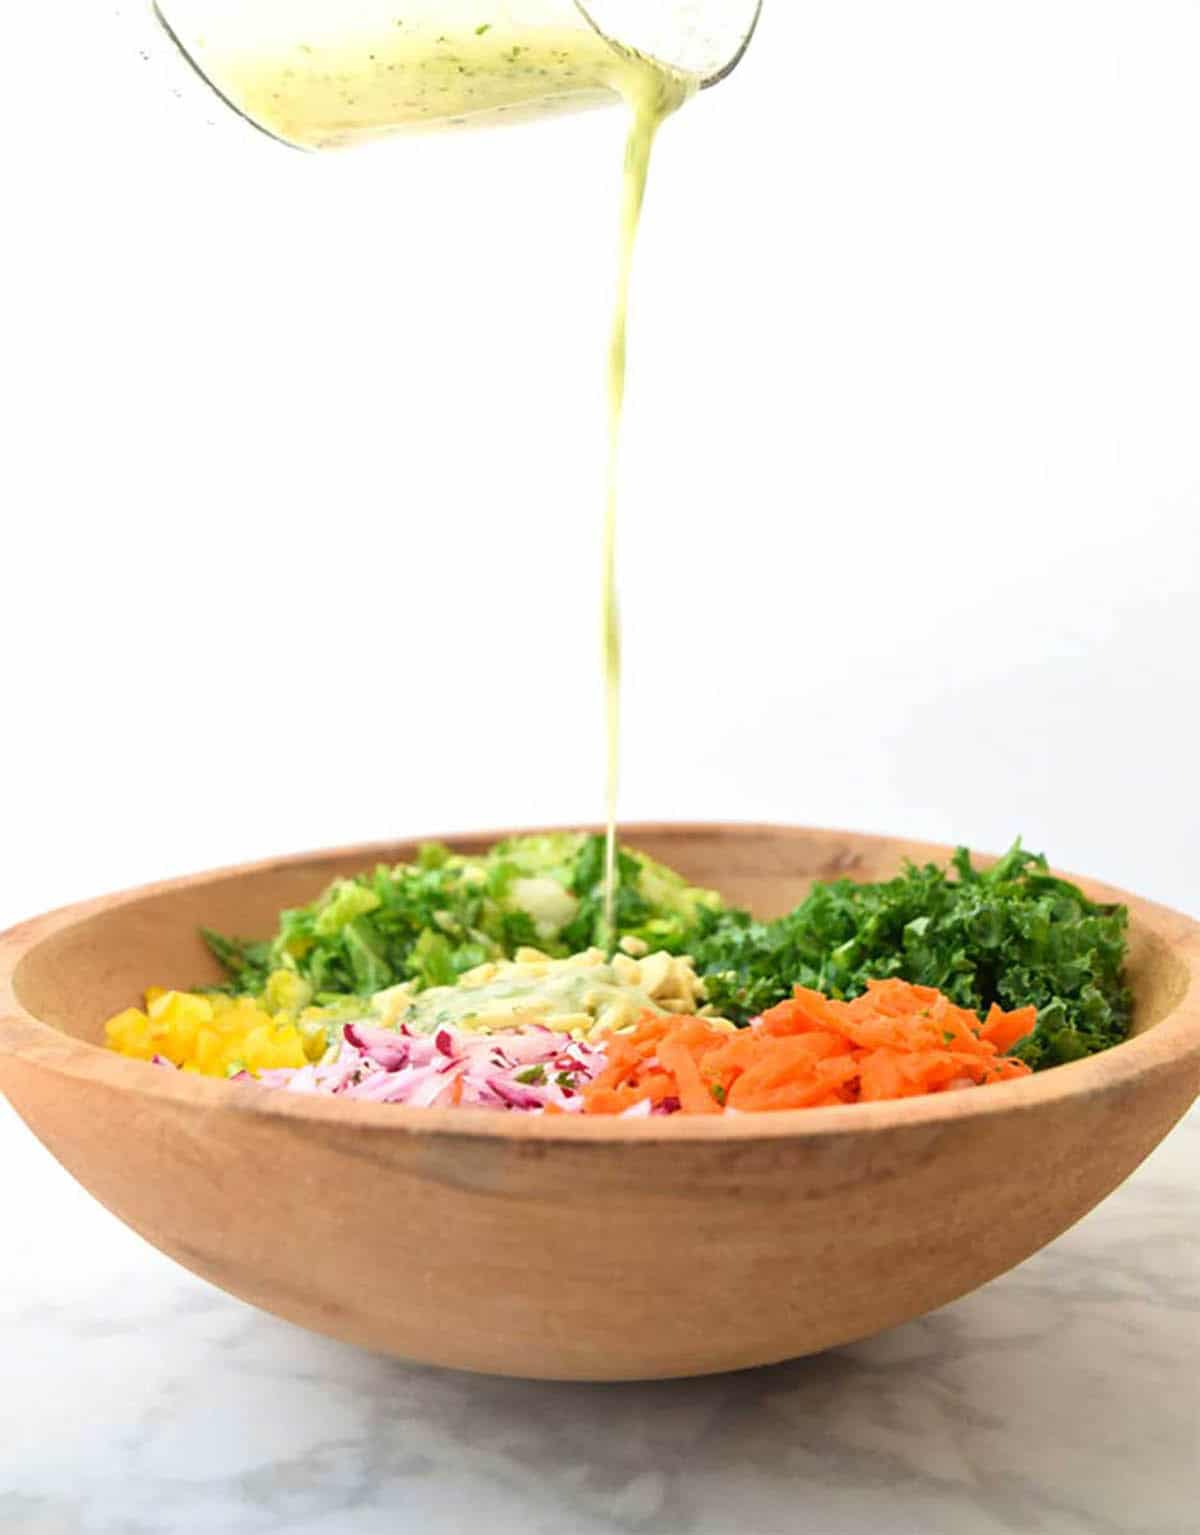 Easy Chopped Detox Salad With Garlic Lemon Vinaigrette